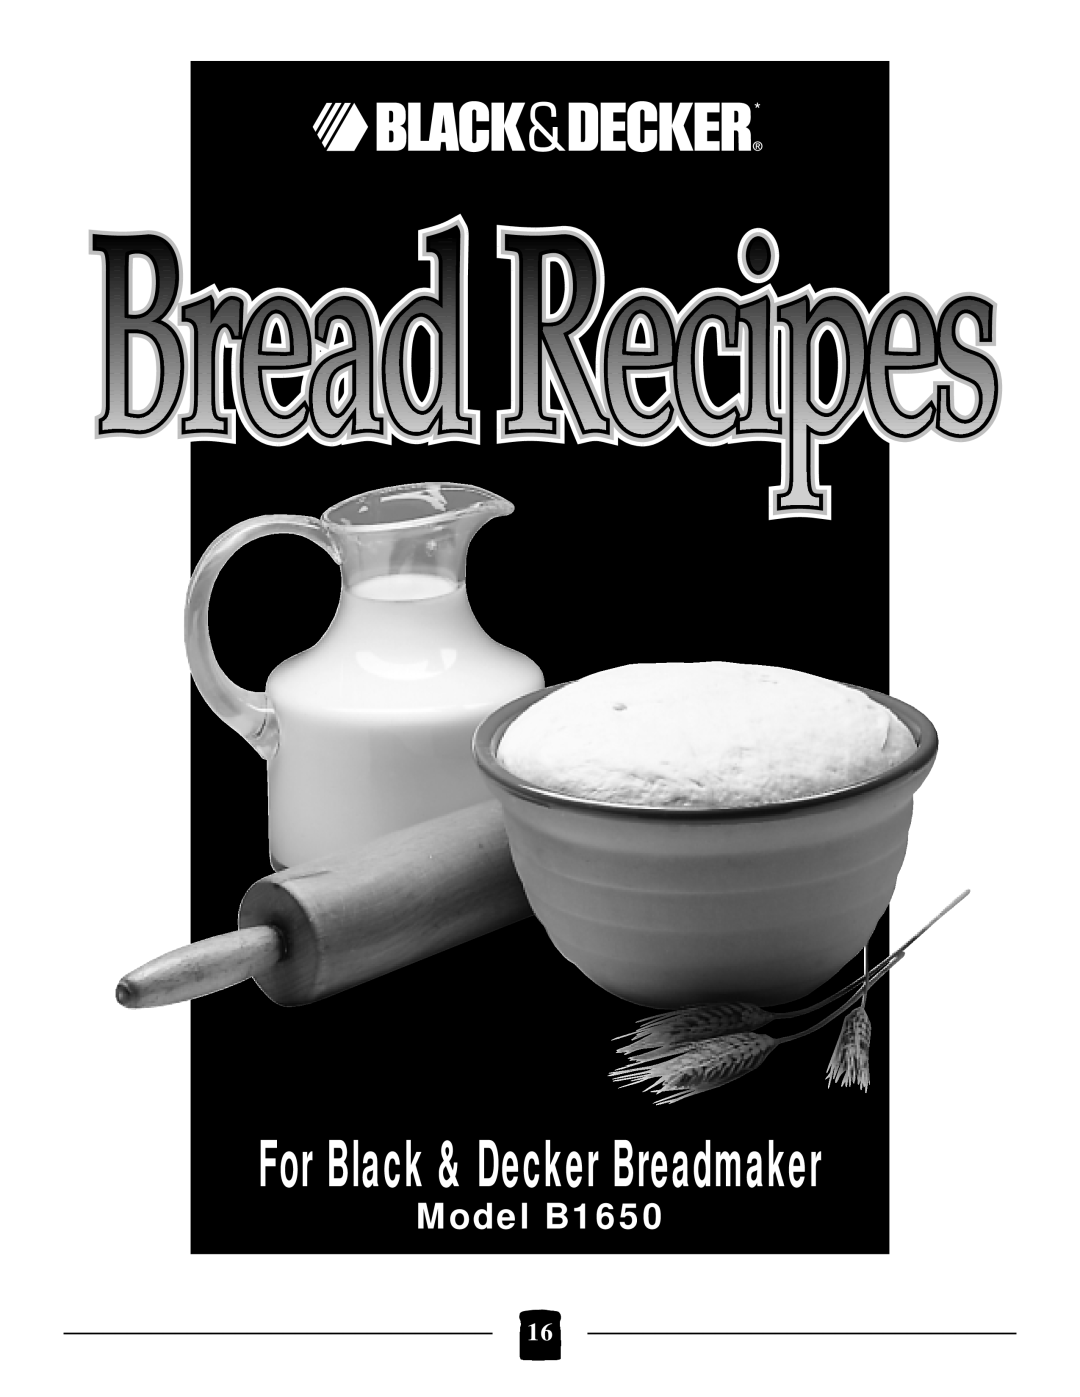 Black & Decker manual Model B1650, For Black & Decker Breadmaker 